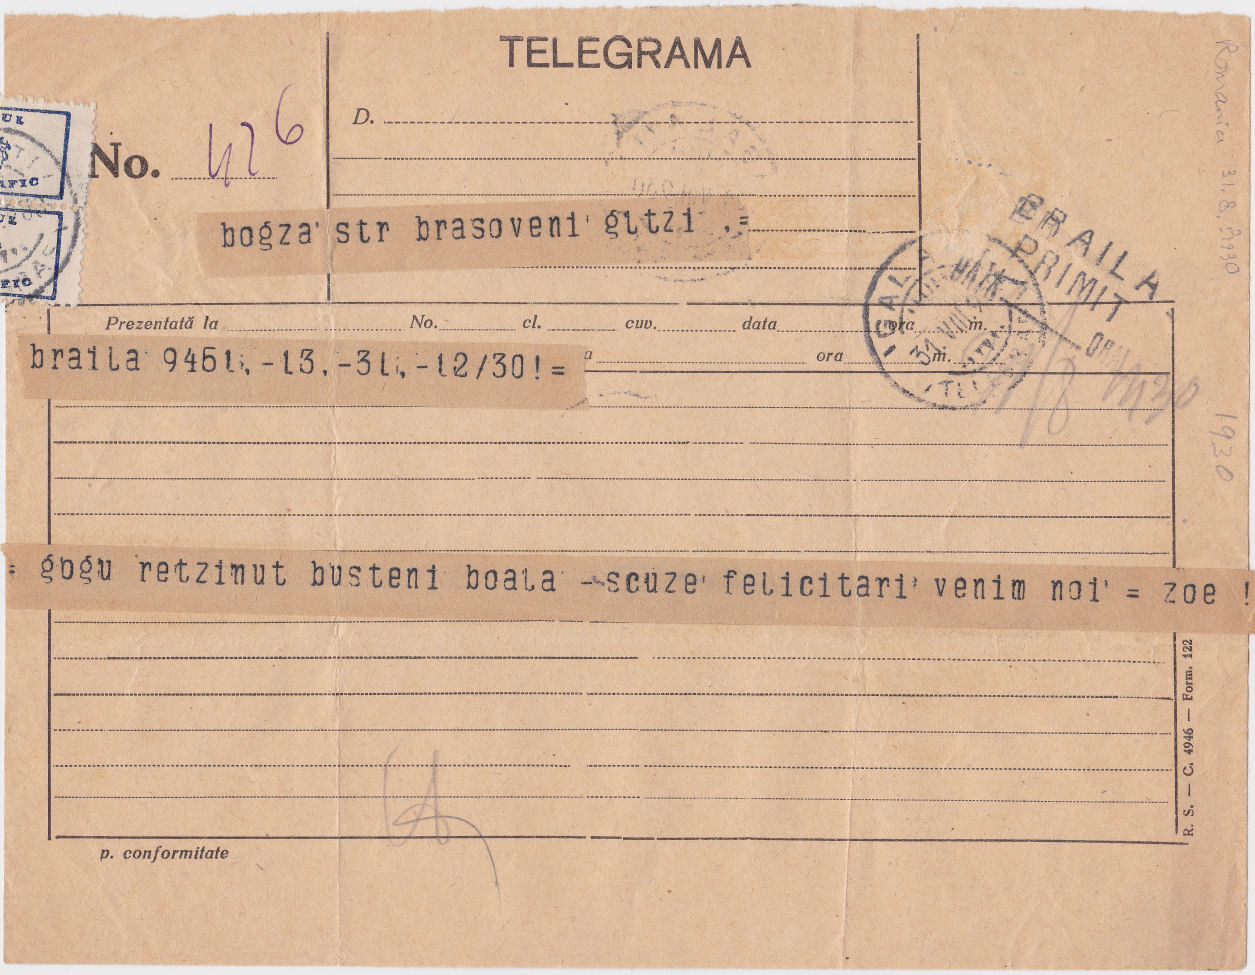 Telegram of 31 August 1930